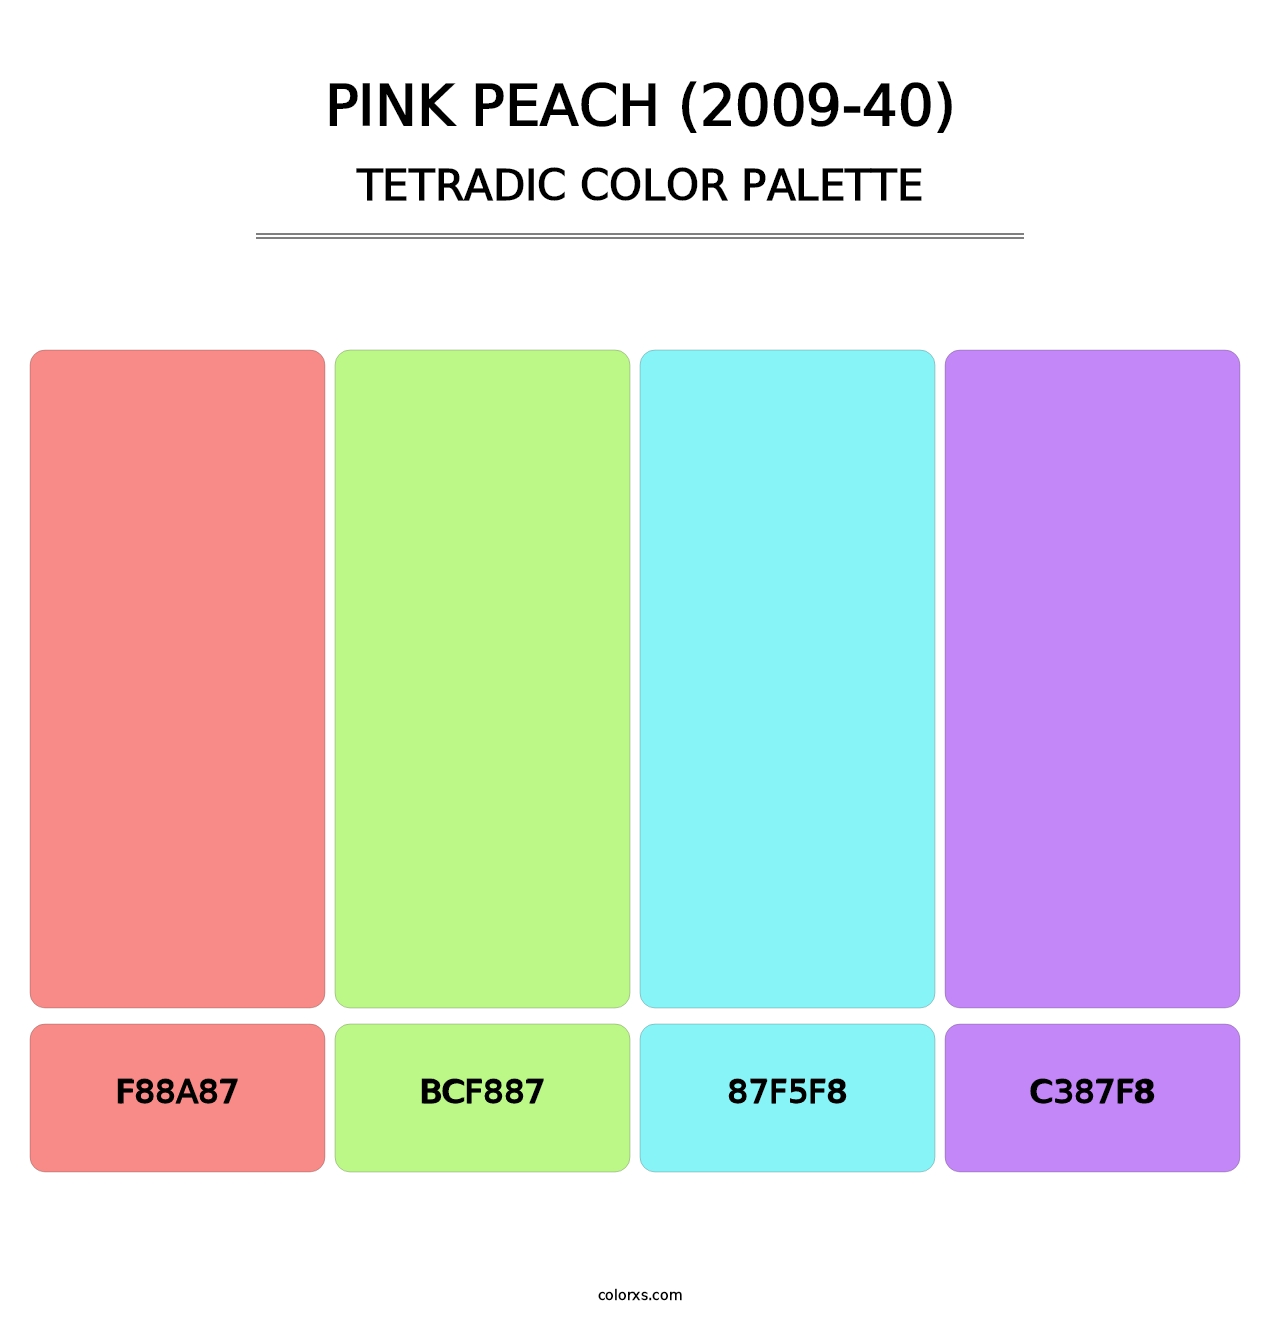 Pink Peach (2009-40) - Tetradic Color Palette